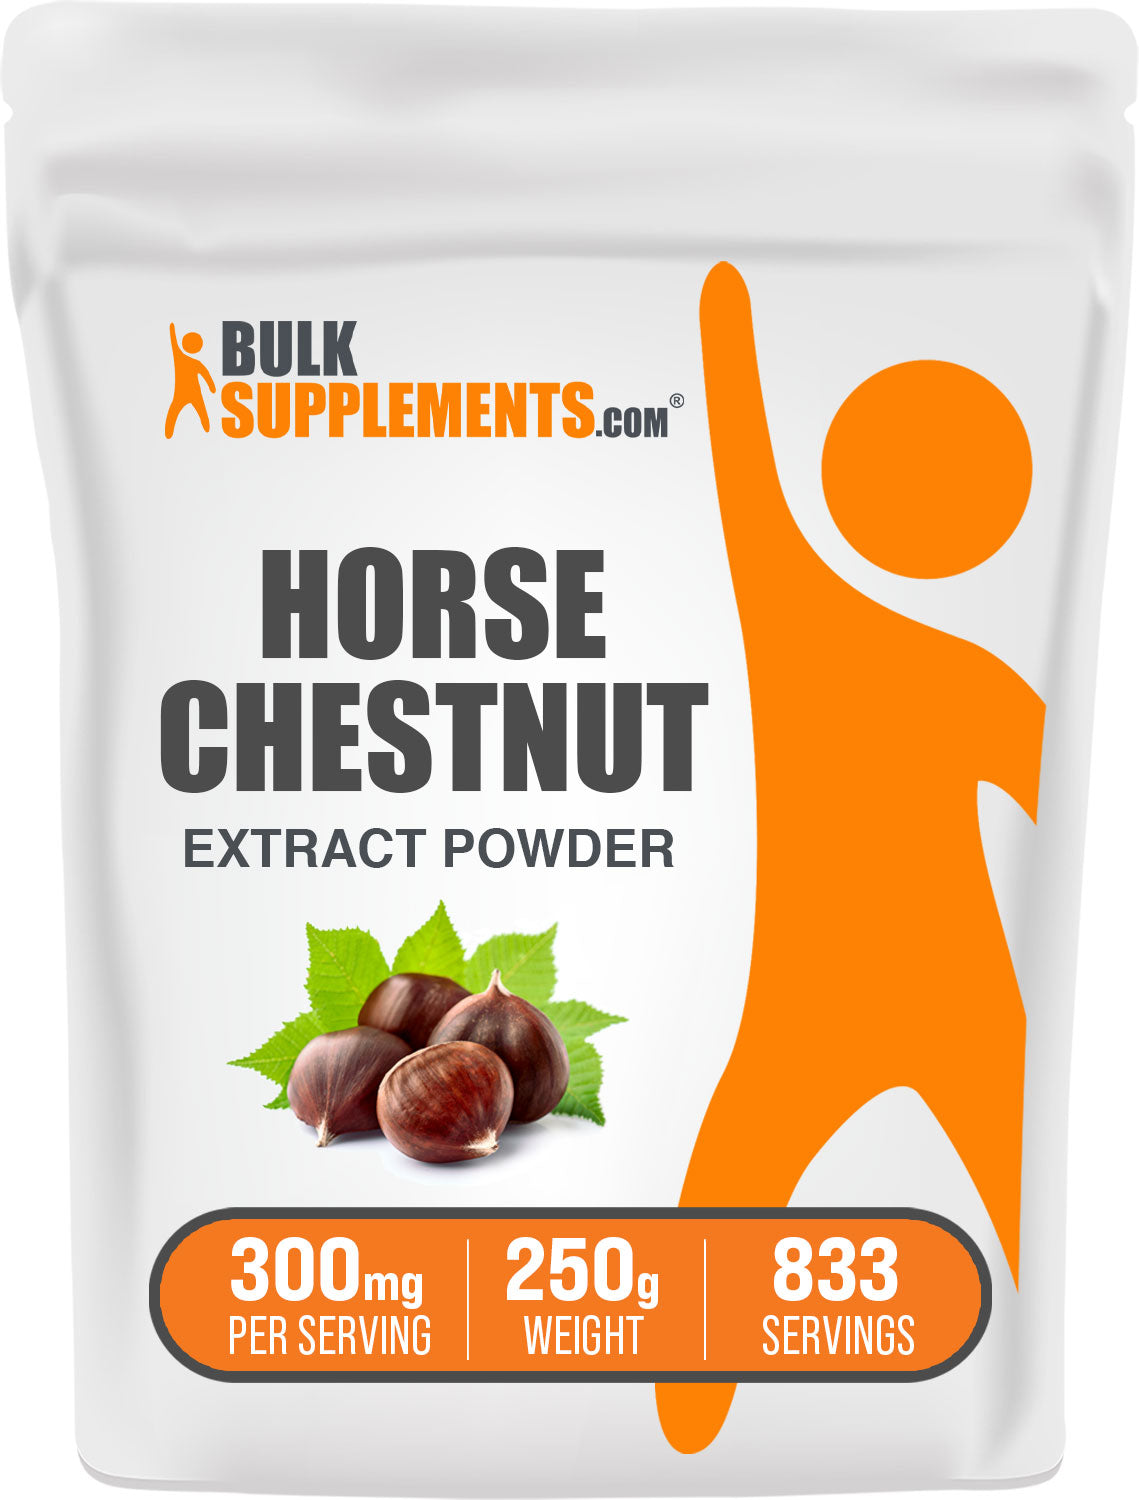 BulkSupplements.com Horse Chestnut Extract Powder 250g Bag